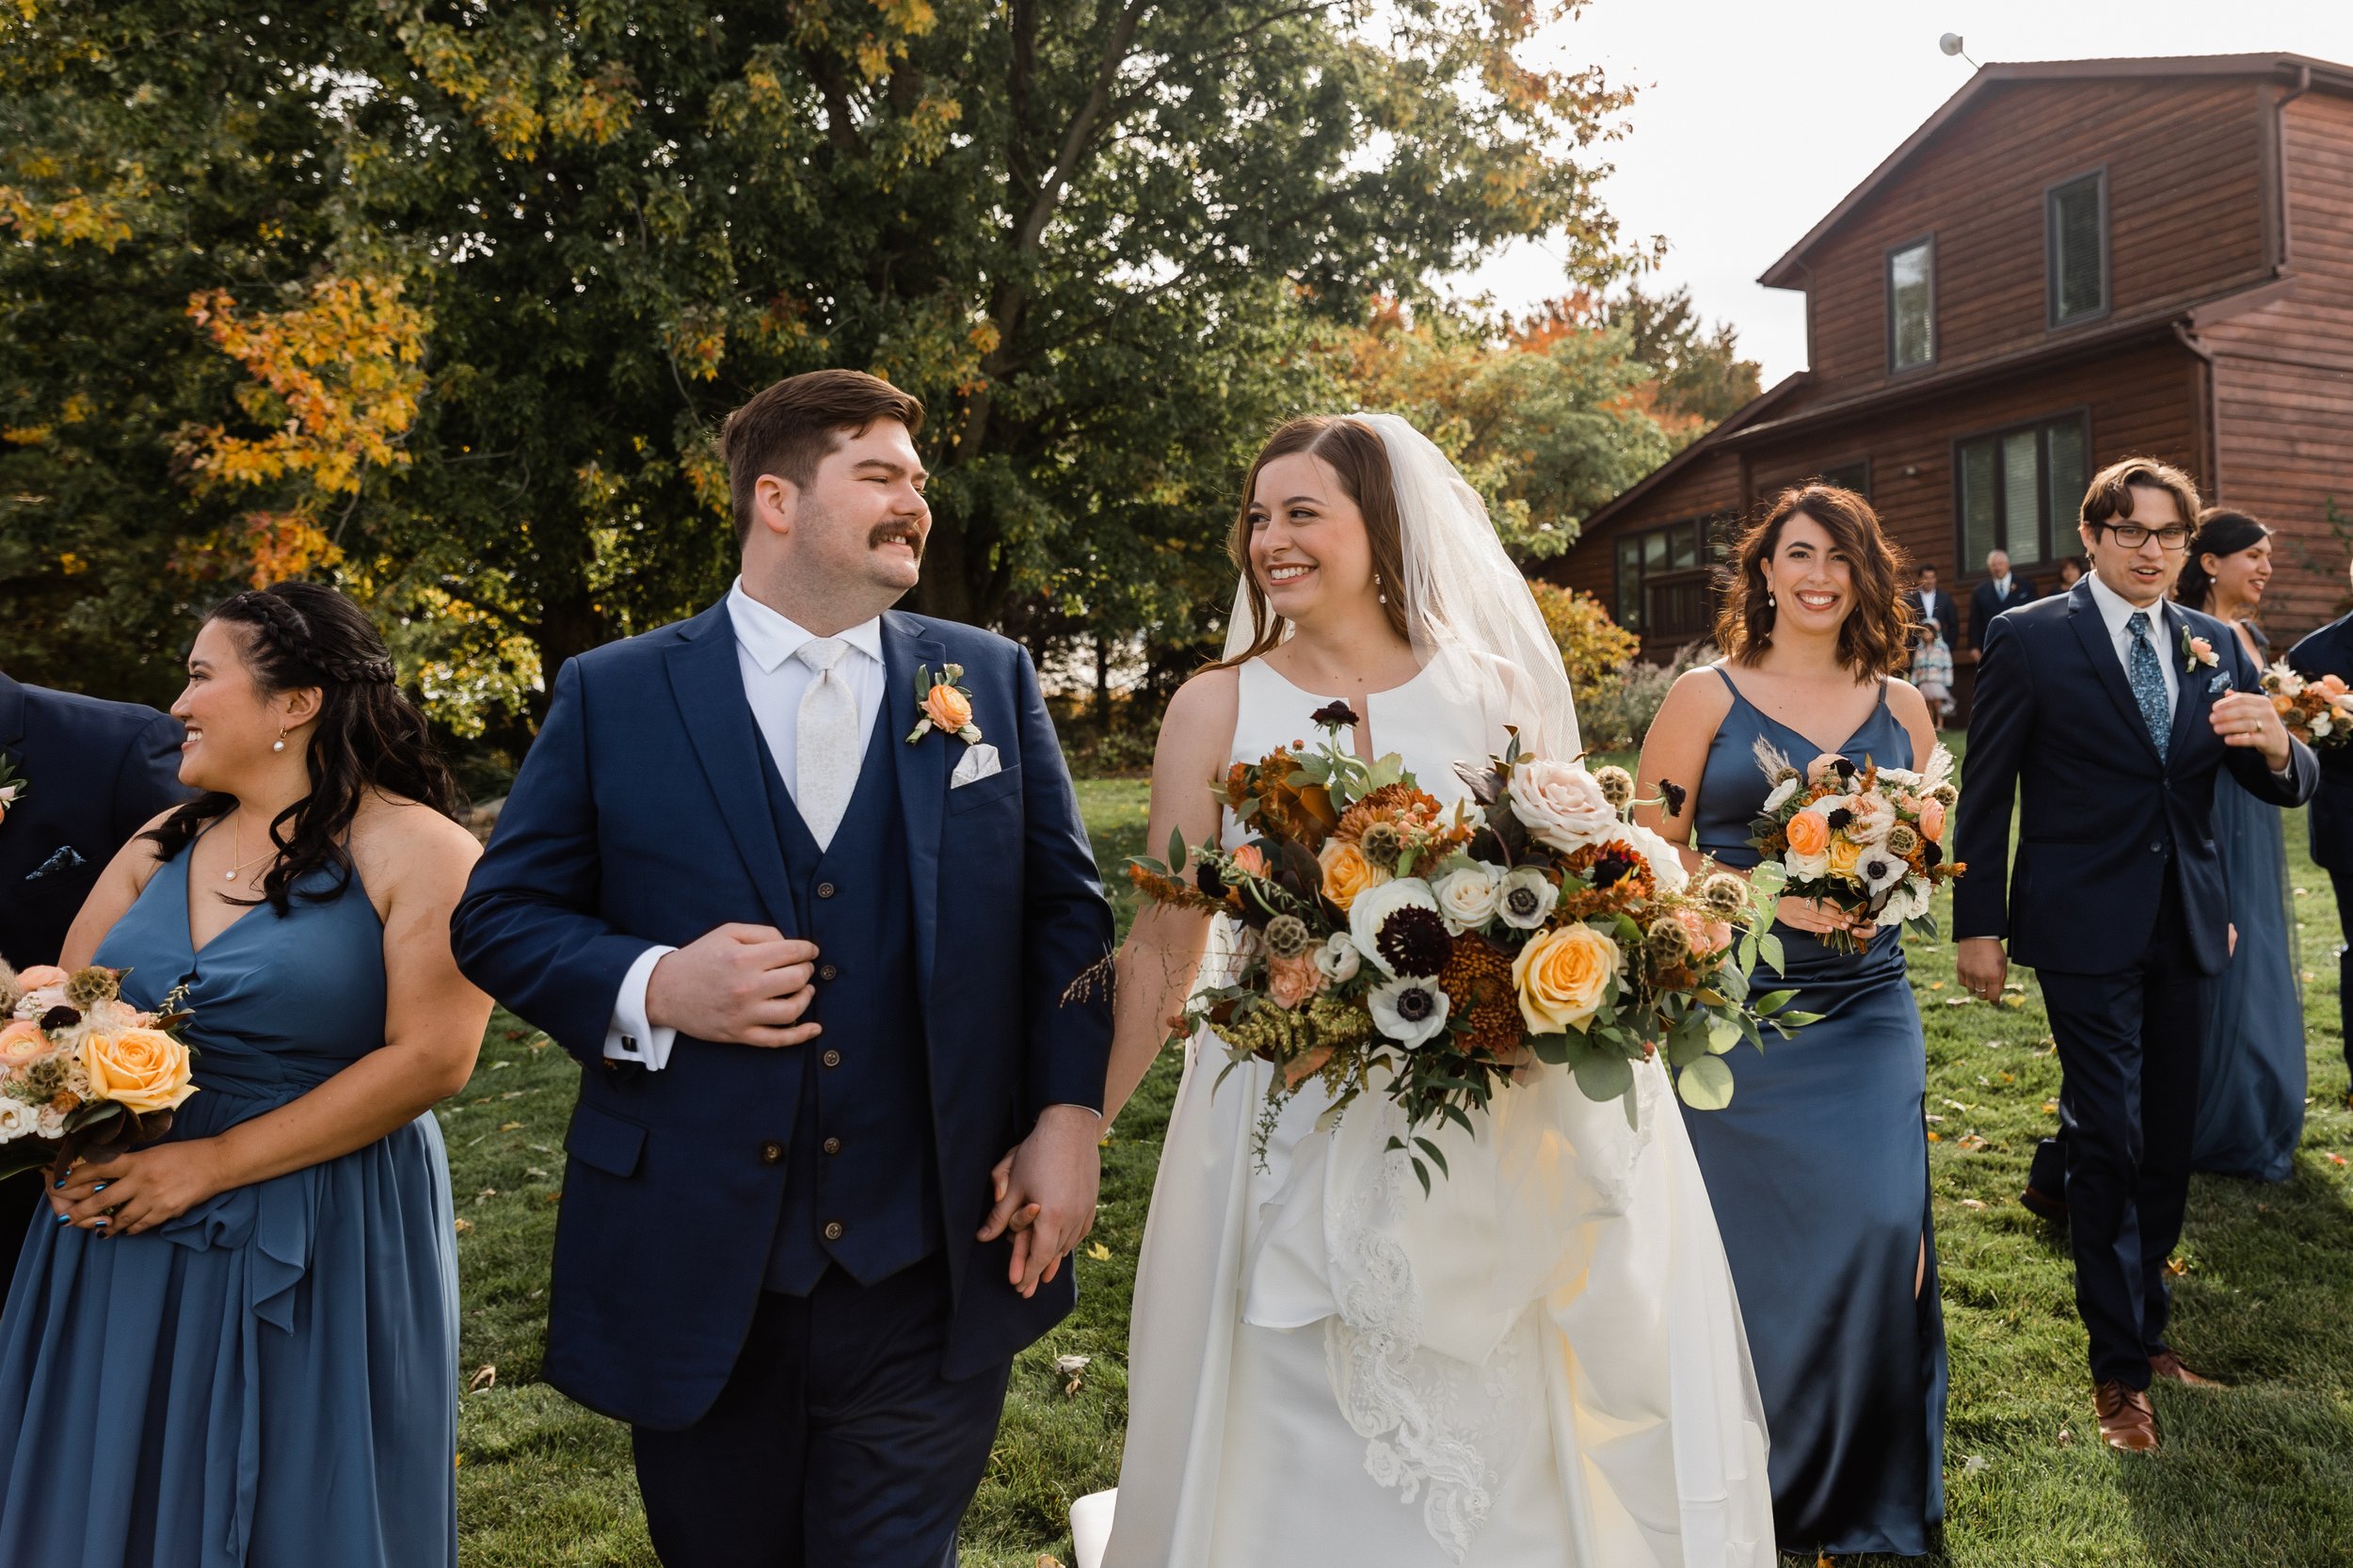 Beautiful Fall wedding at Pear Tree Estate in Champaign, Illinois.